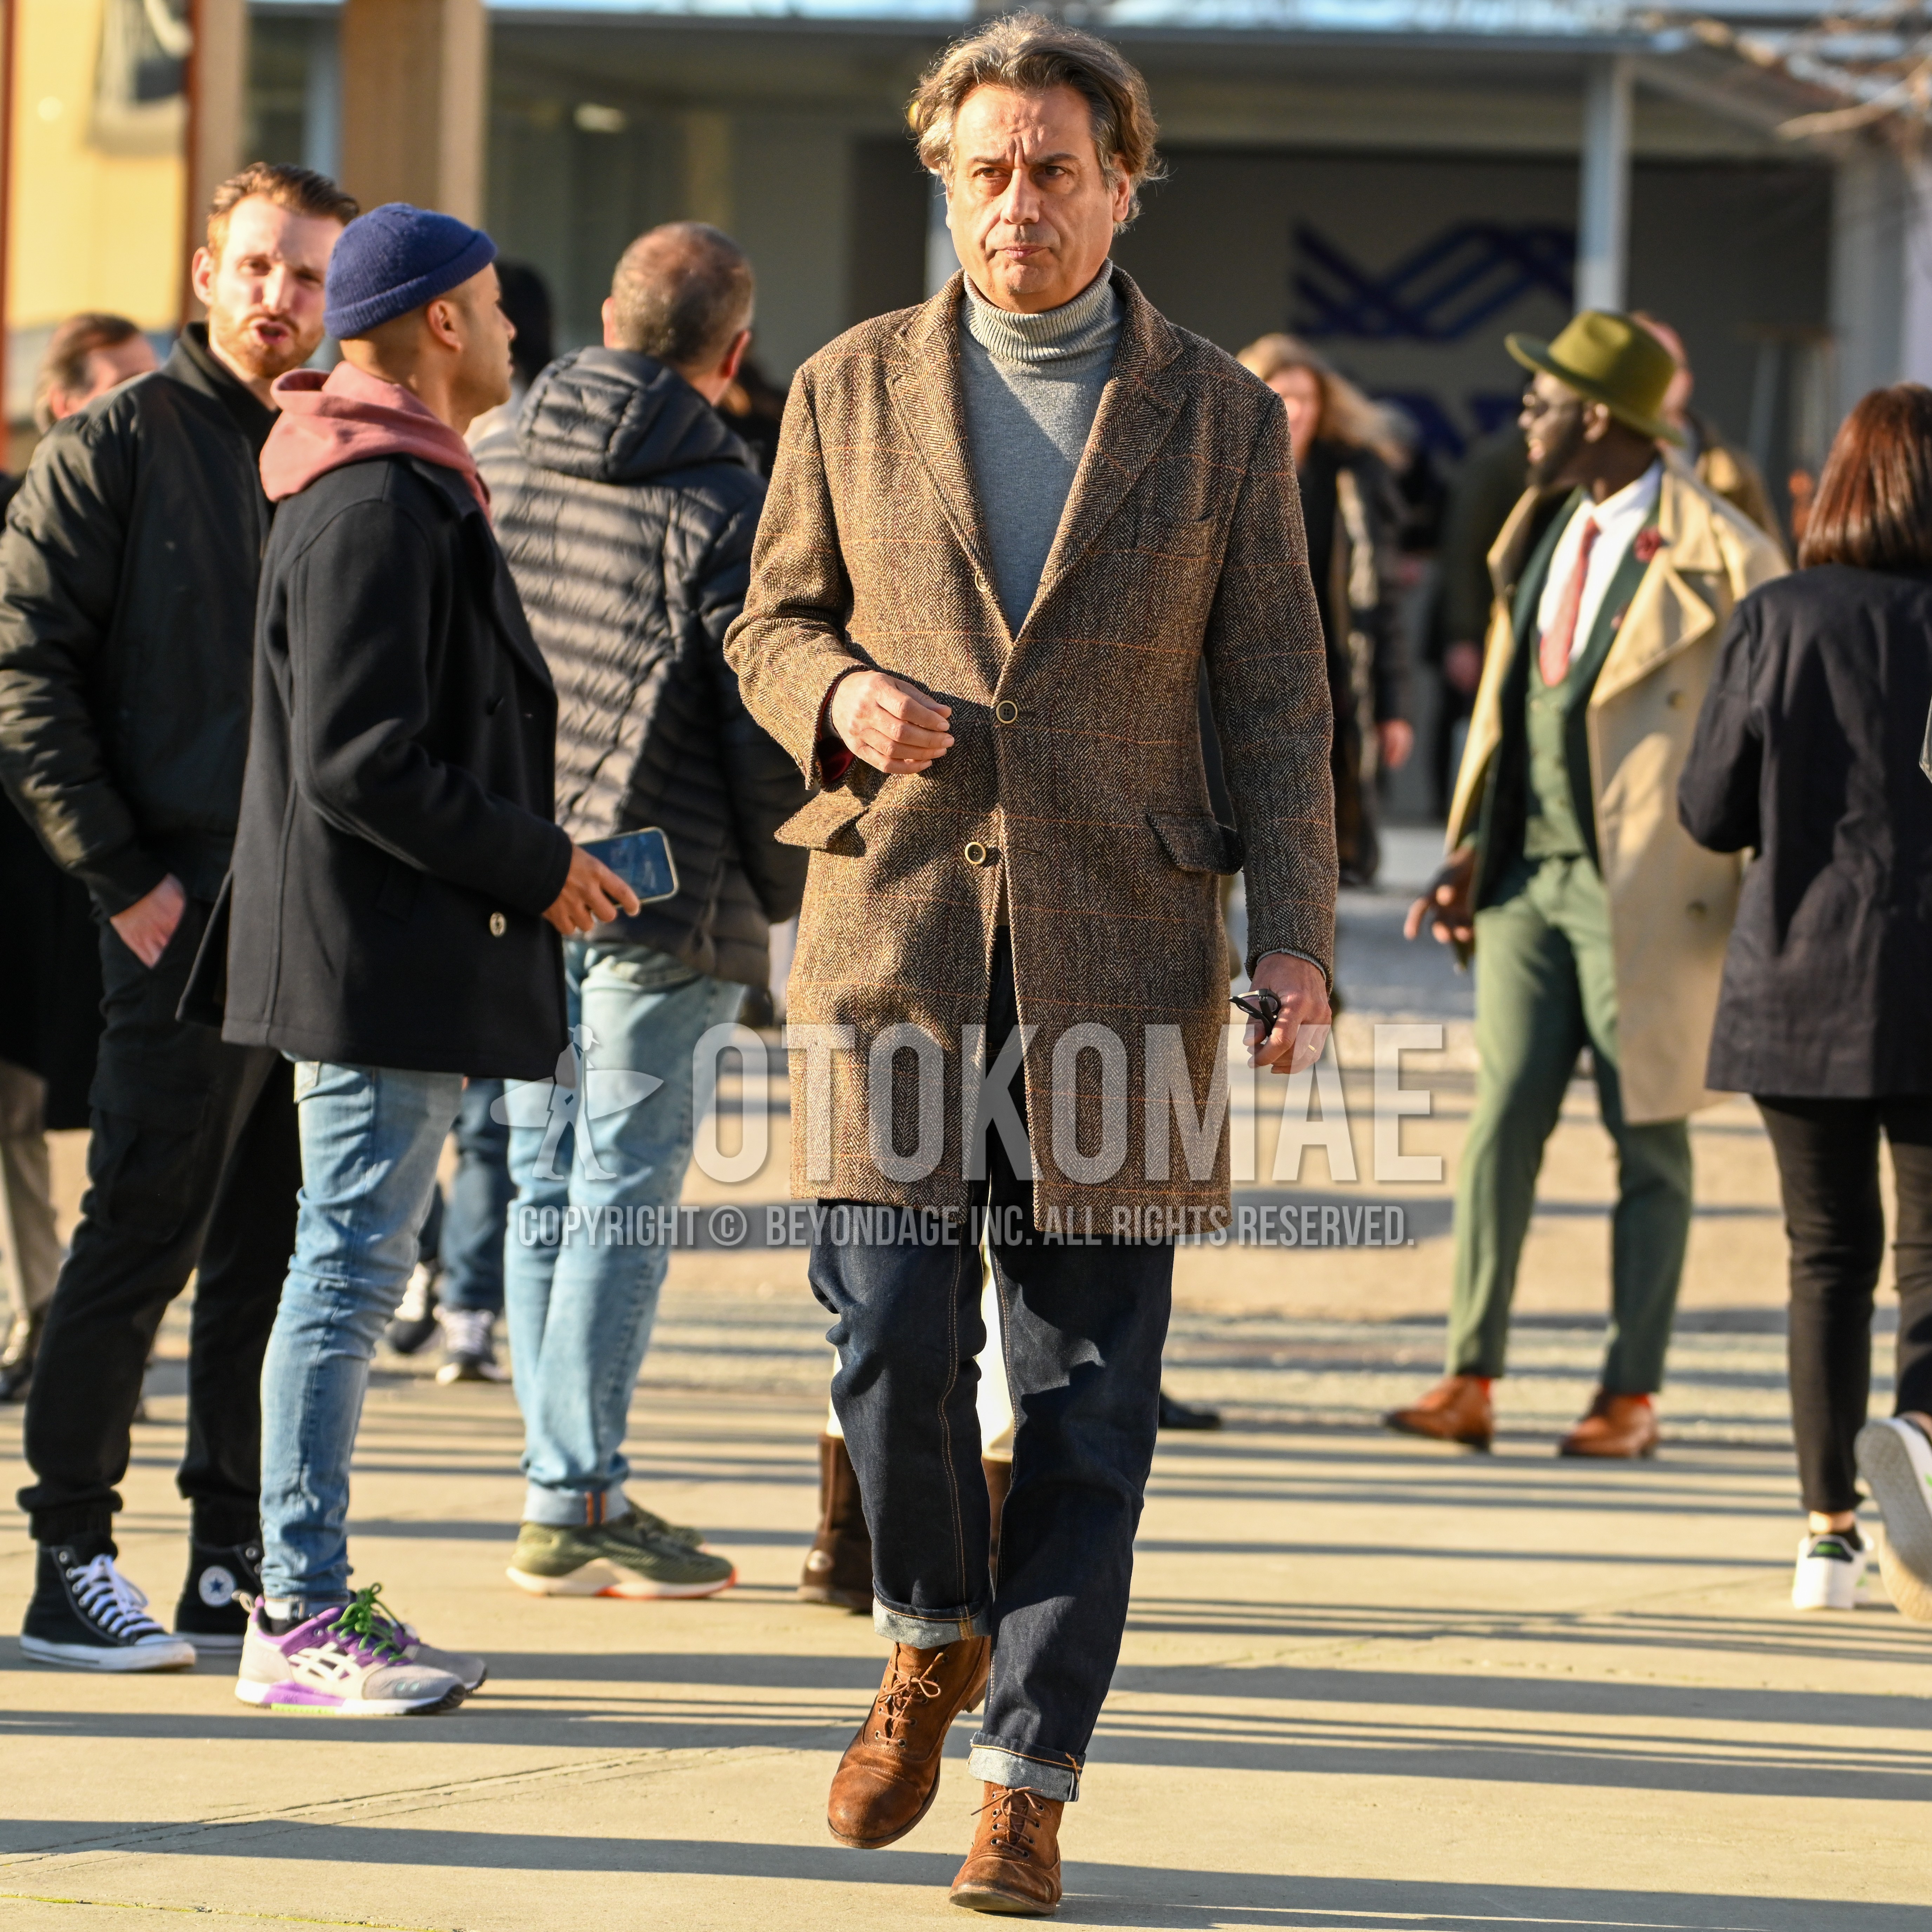 Men's autumn winter outfit with brown check stenkarrer coat, gray plain turtleneck knit, plain denim/jeans, brown  boots.